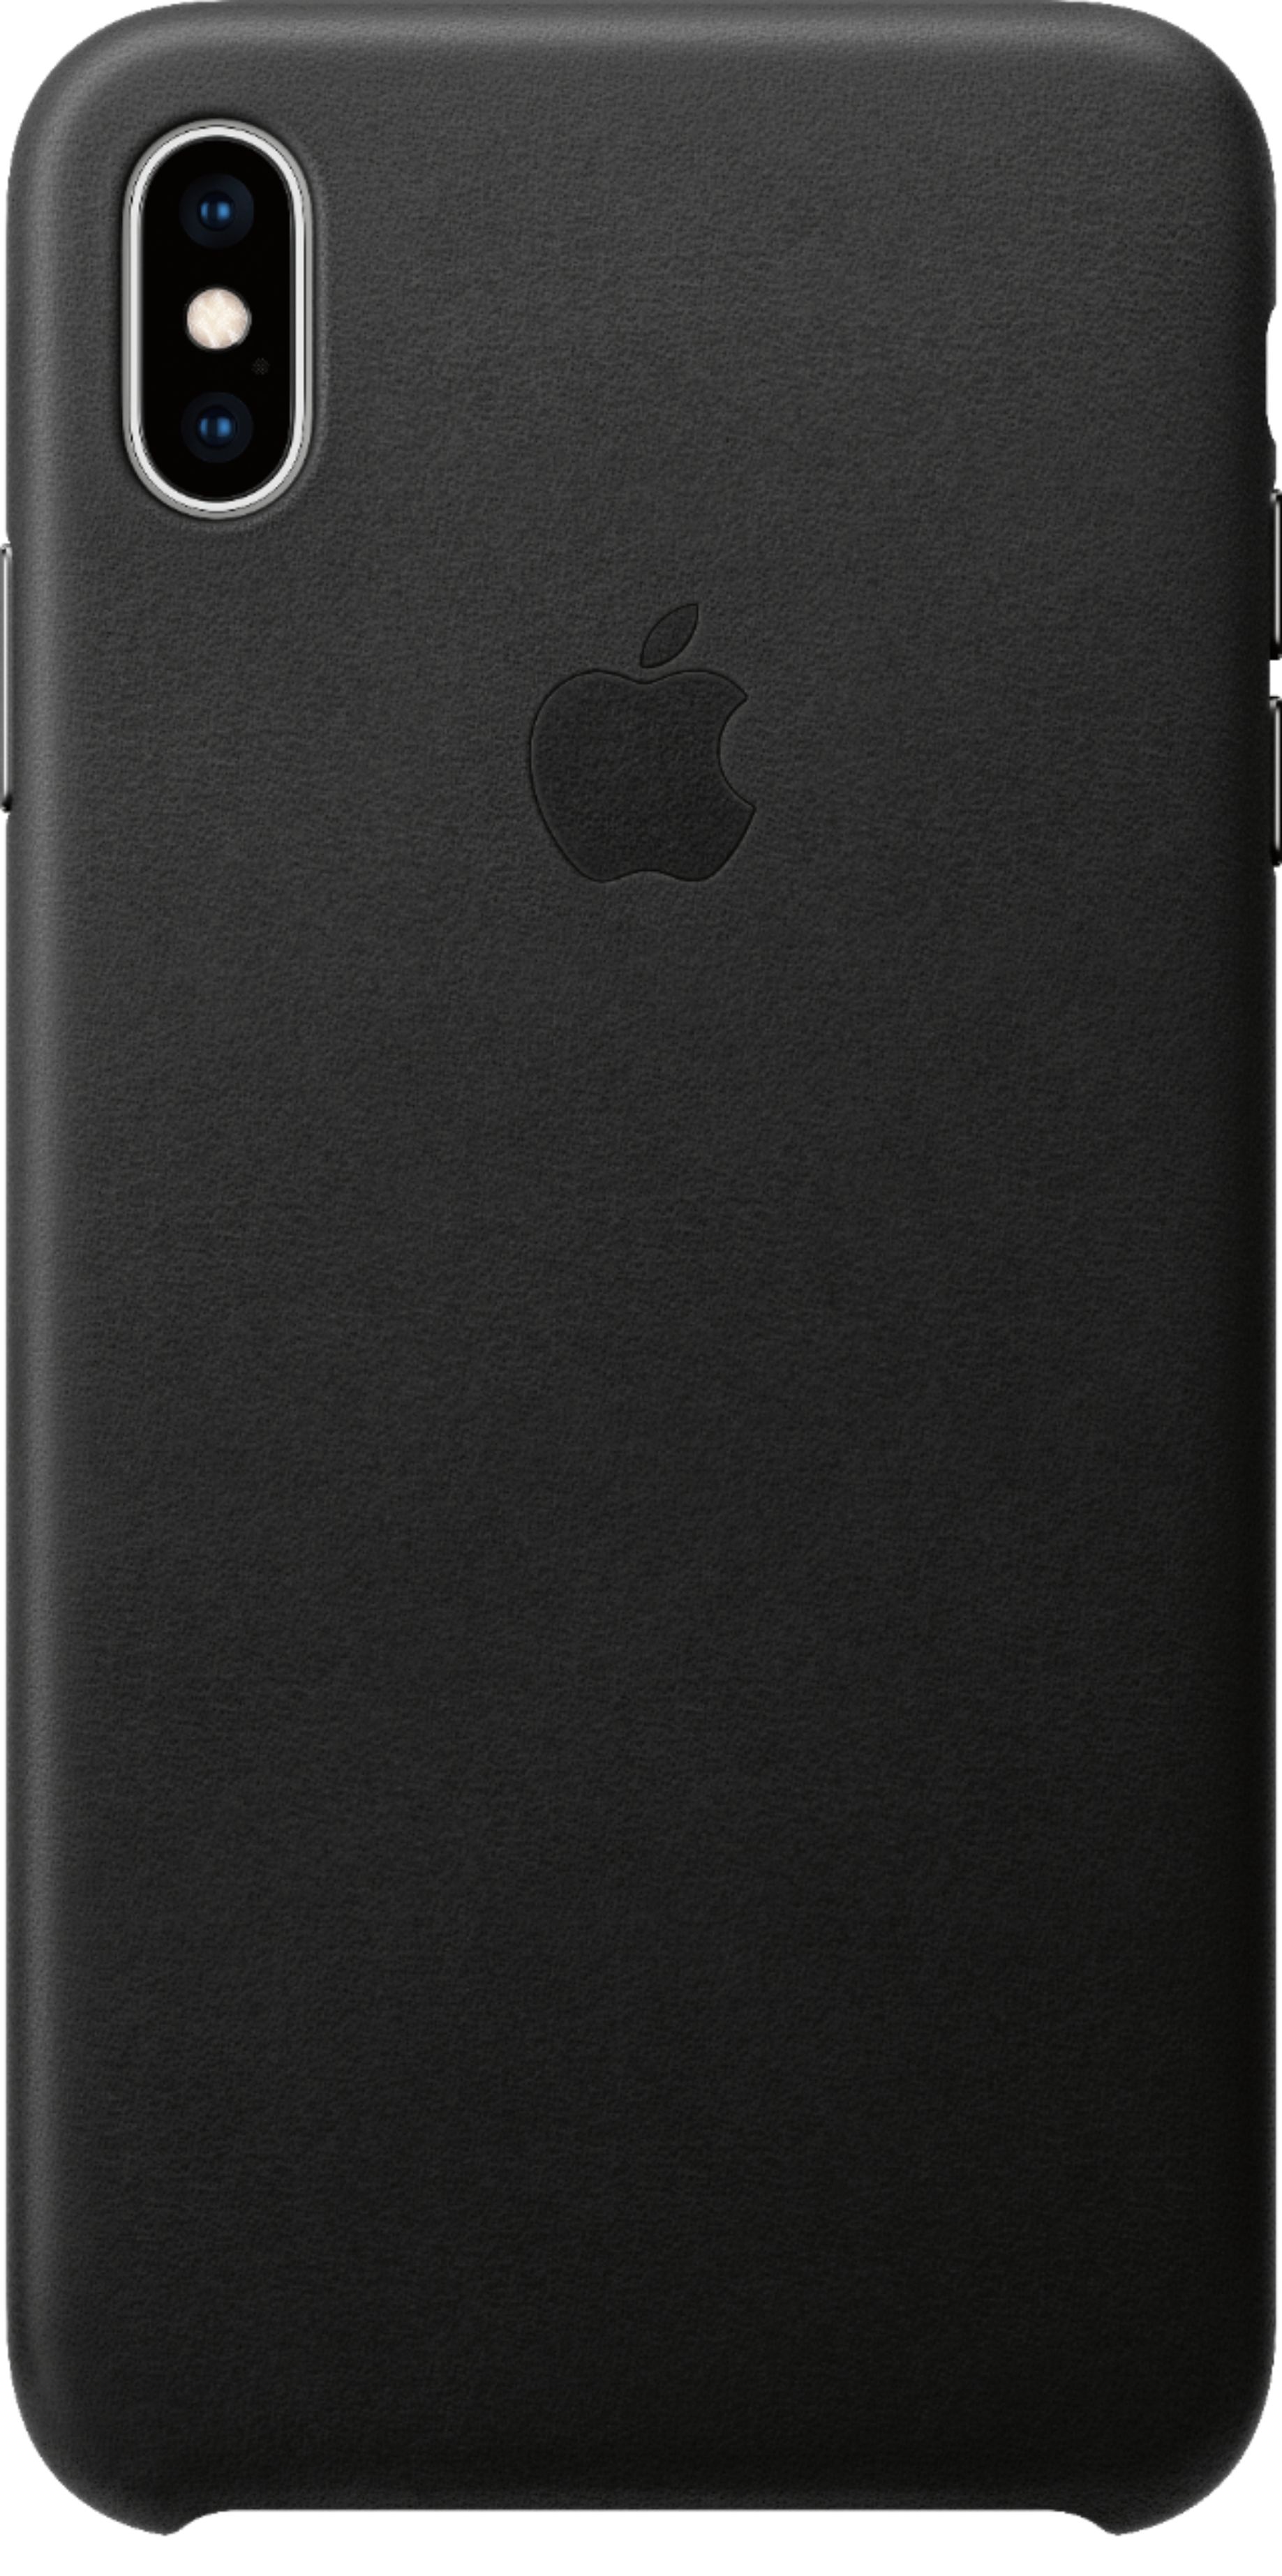 Apple iPhone® XS Max Leather Case Black MRWT2ZM/A - Best Buy